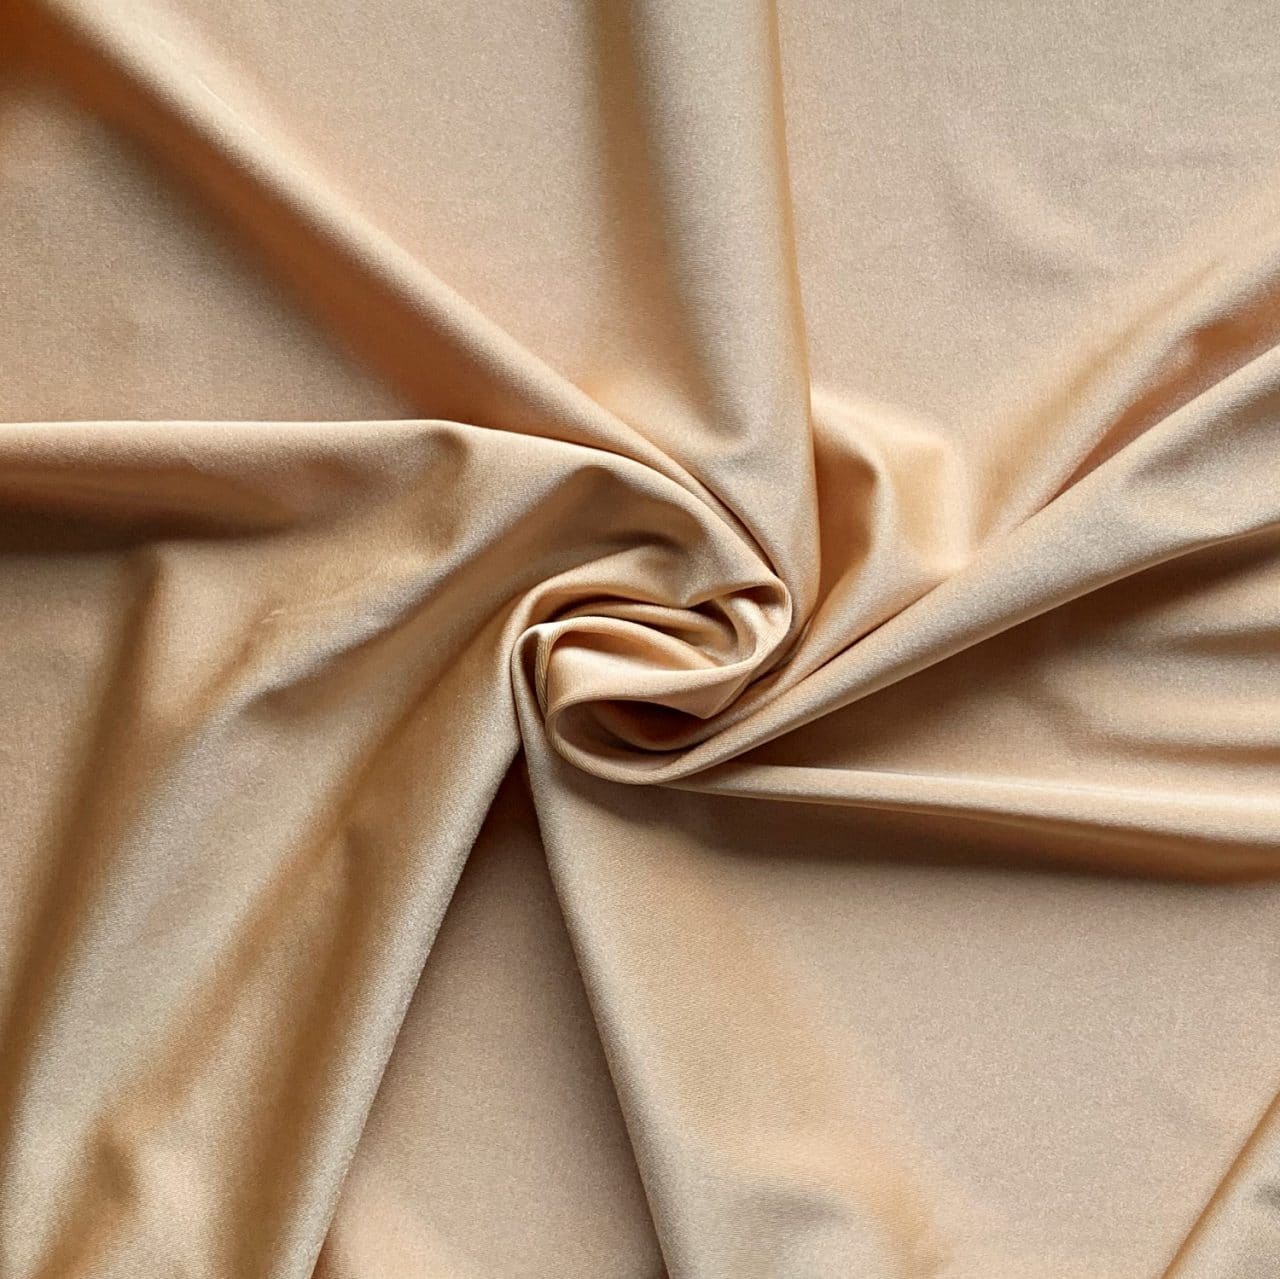 https://www.solidstonefabrics.com/wp-content/uploads/2018/06/Carvico-Sumatra-Brule-Shiny-Nude-Nylon-Lycra-Fabric-for-Swimwear-Solid-Stone-Fabrics-Inc..jpg